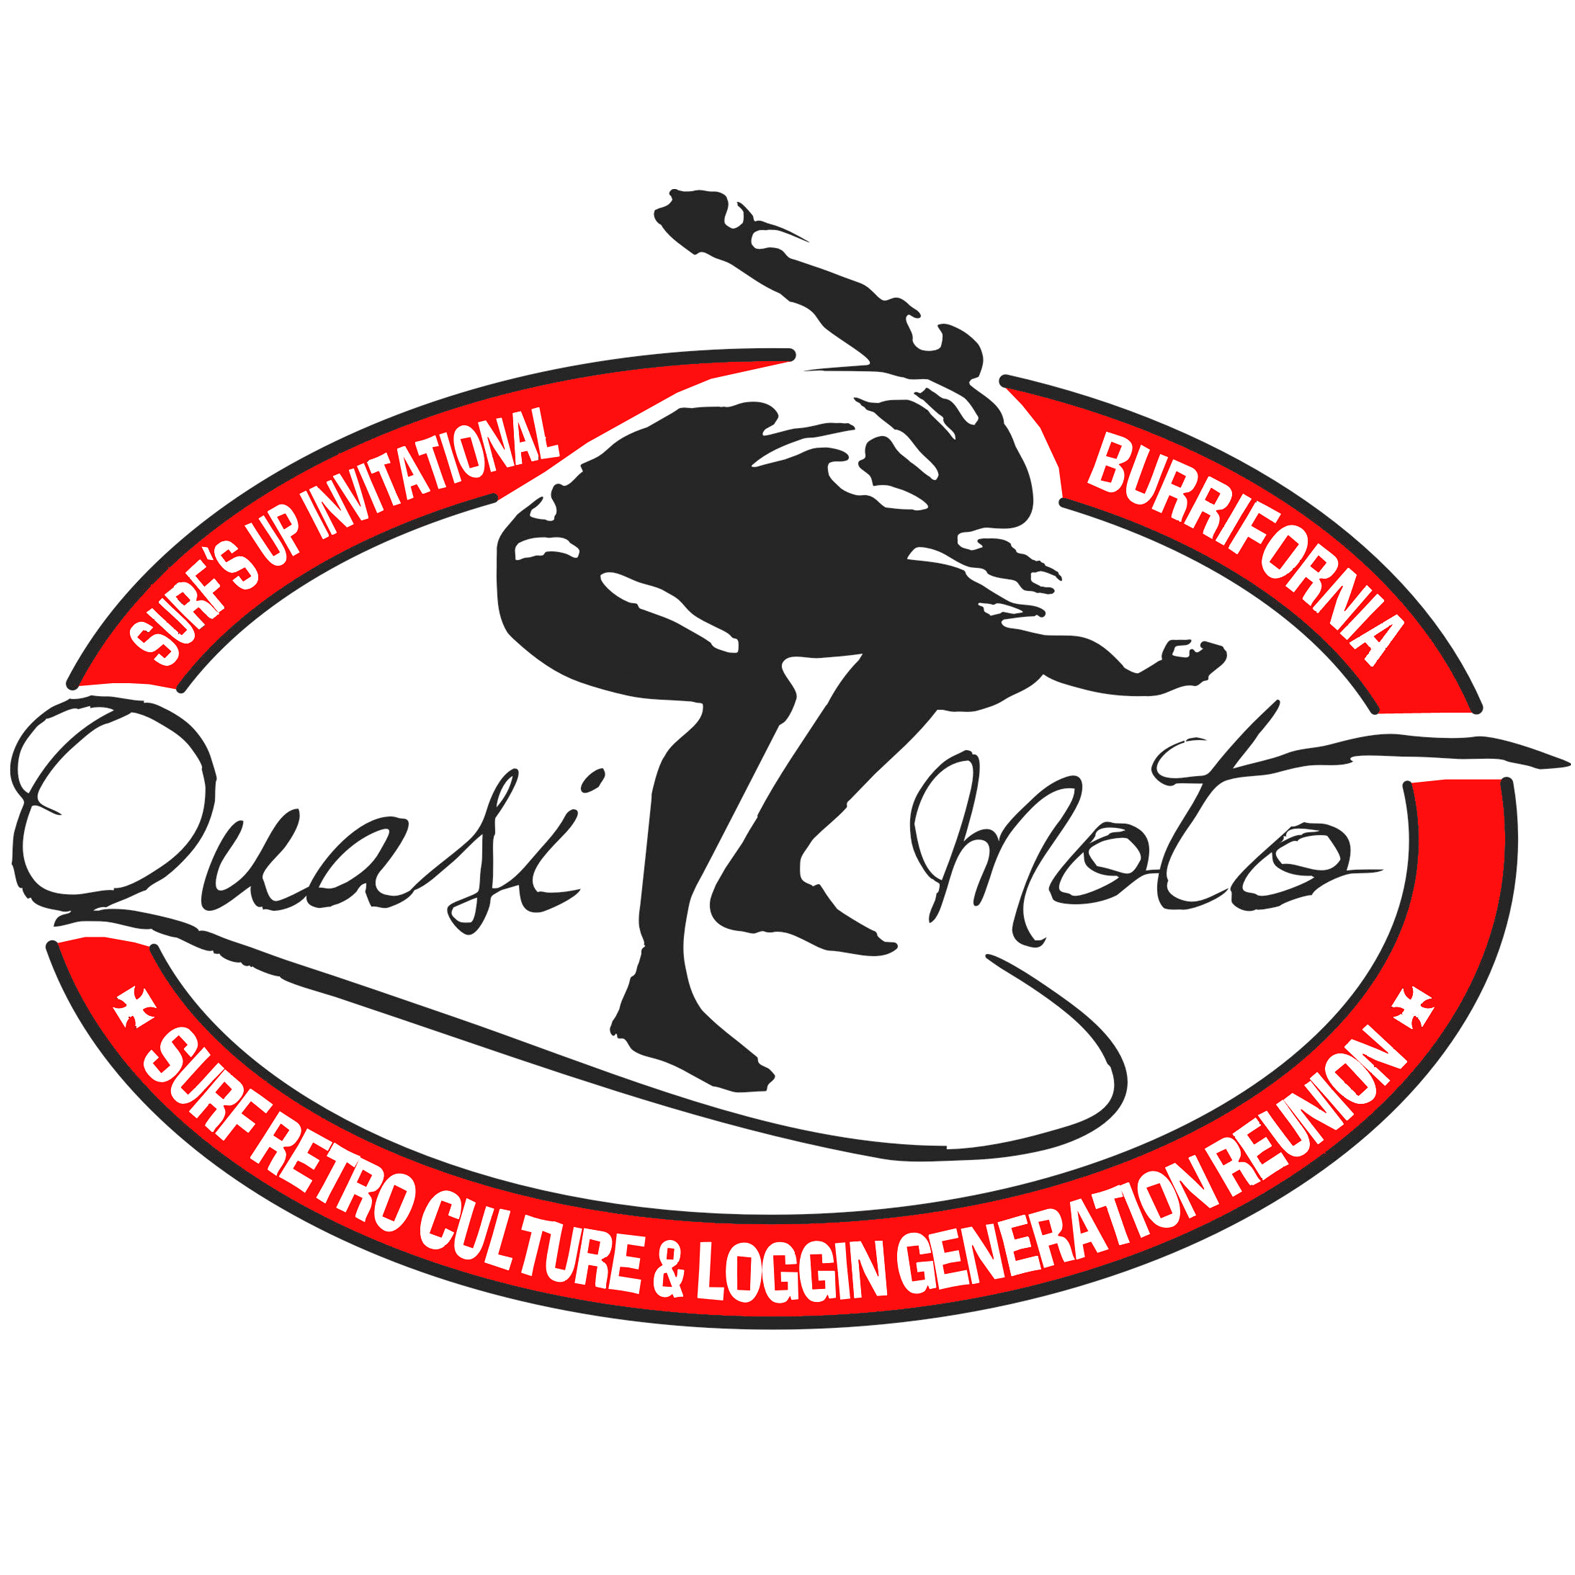 QUASIMOTO SURF´S UP INVITATIONAL BURRIFORNIA